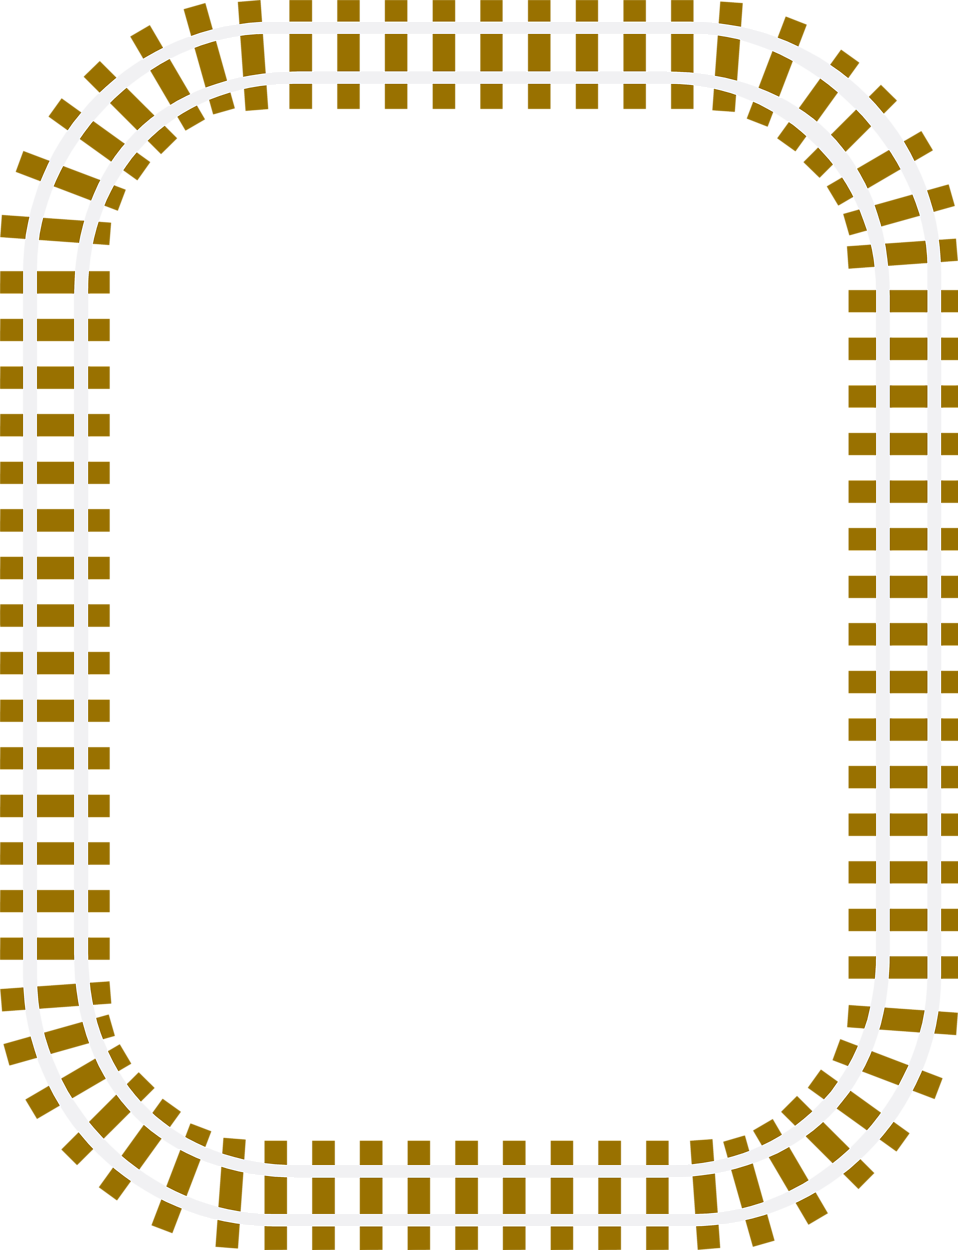 Illustration of a blank. Engineering clipart border